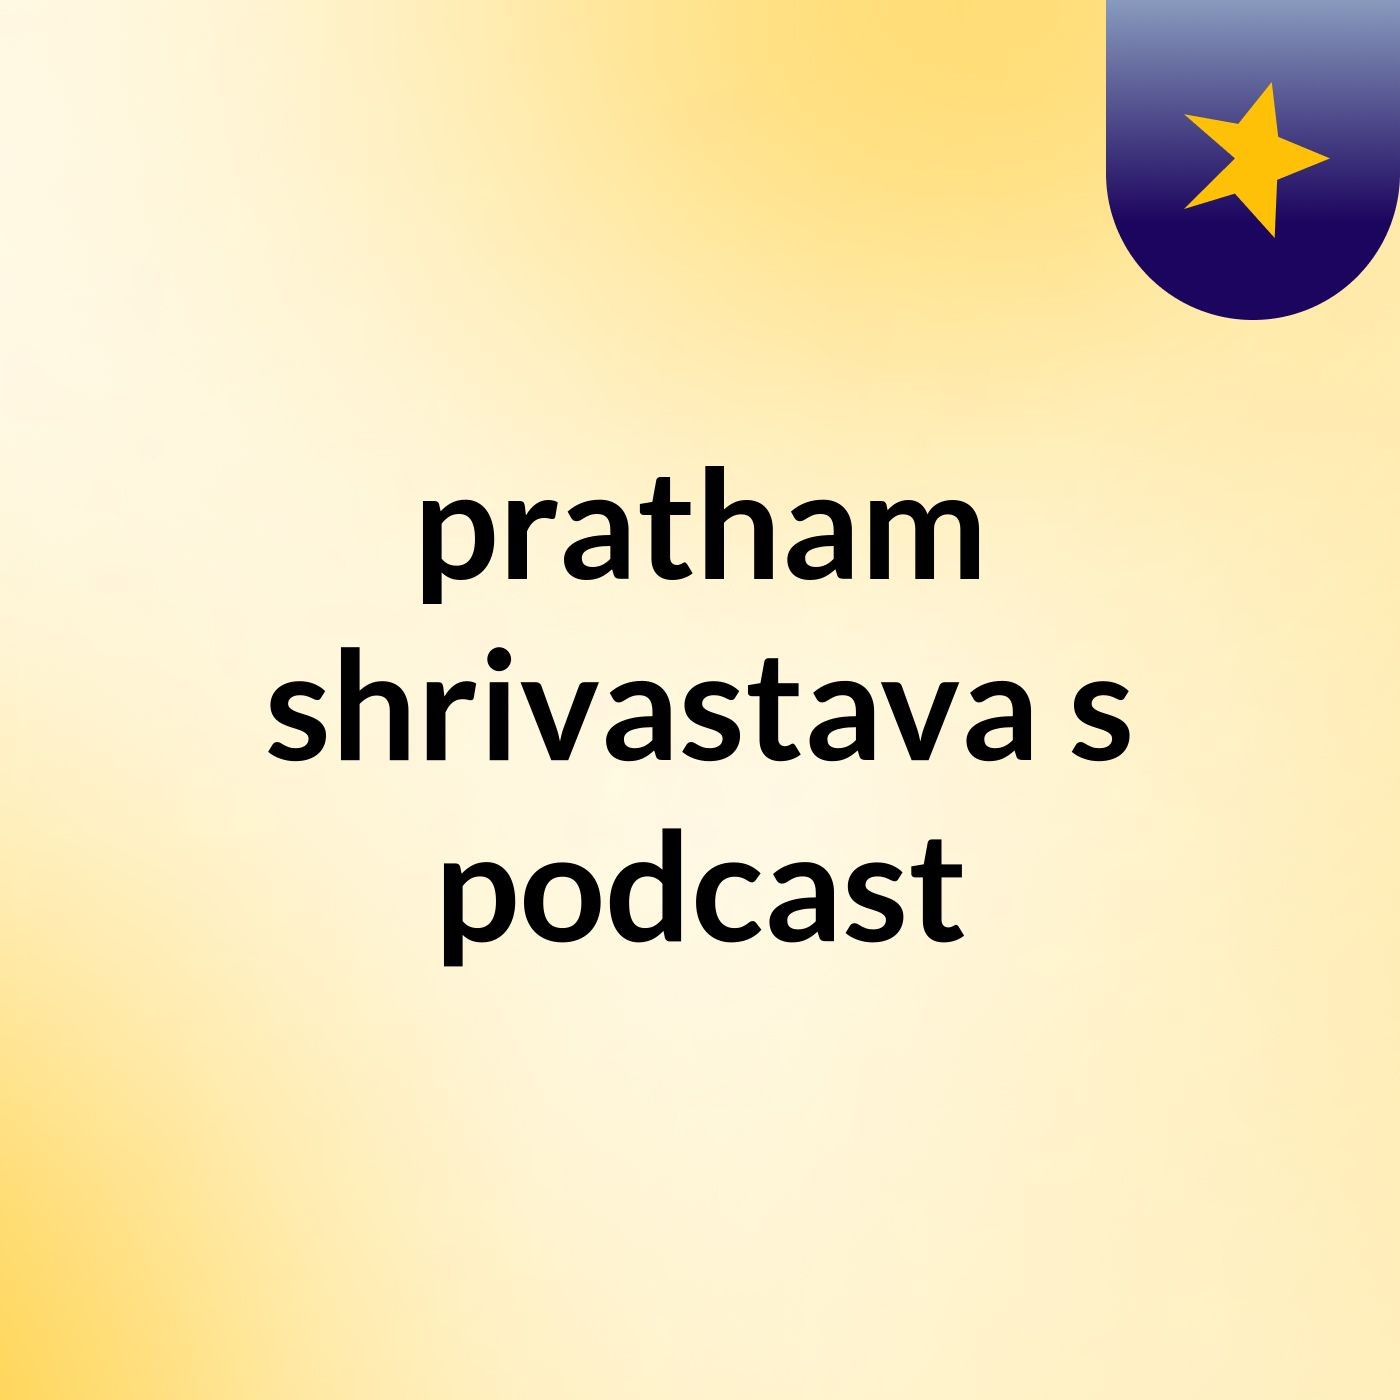 Episode 5 - pratham shrivastava's podcast